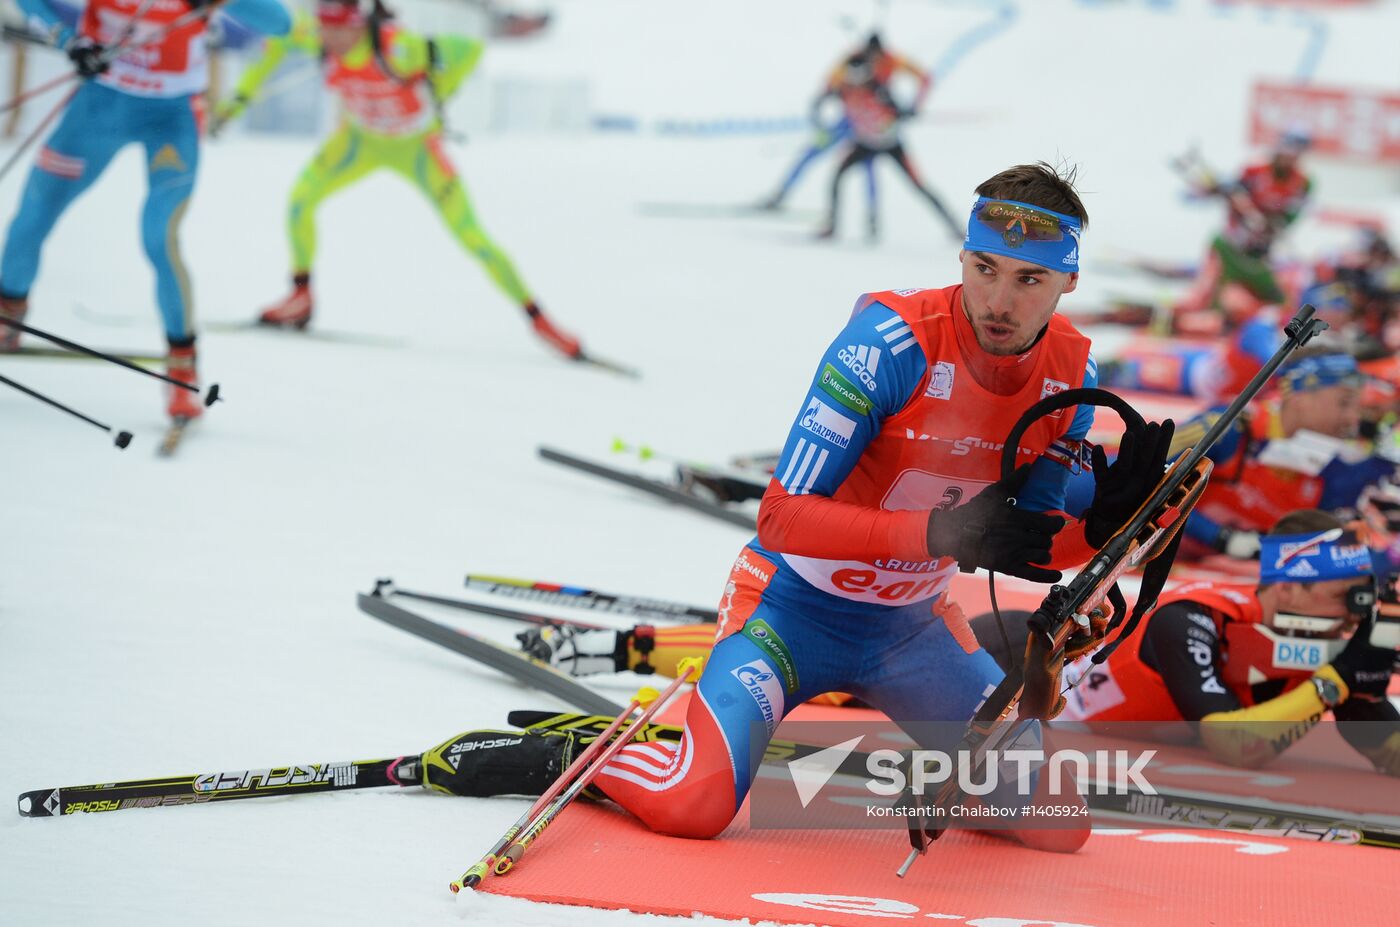 Biathlon World Cup – World Cup 8. Men's relay